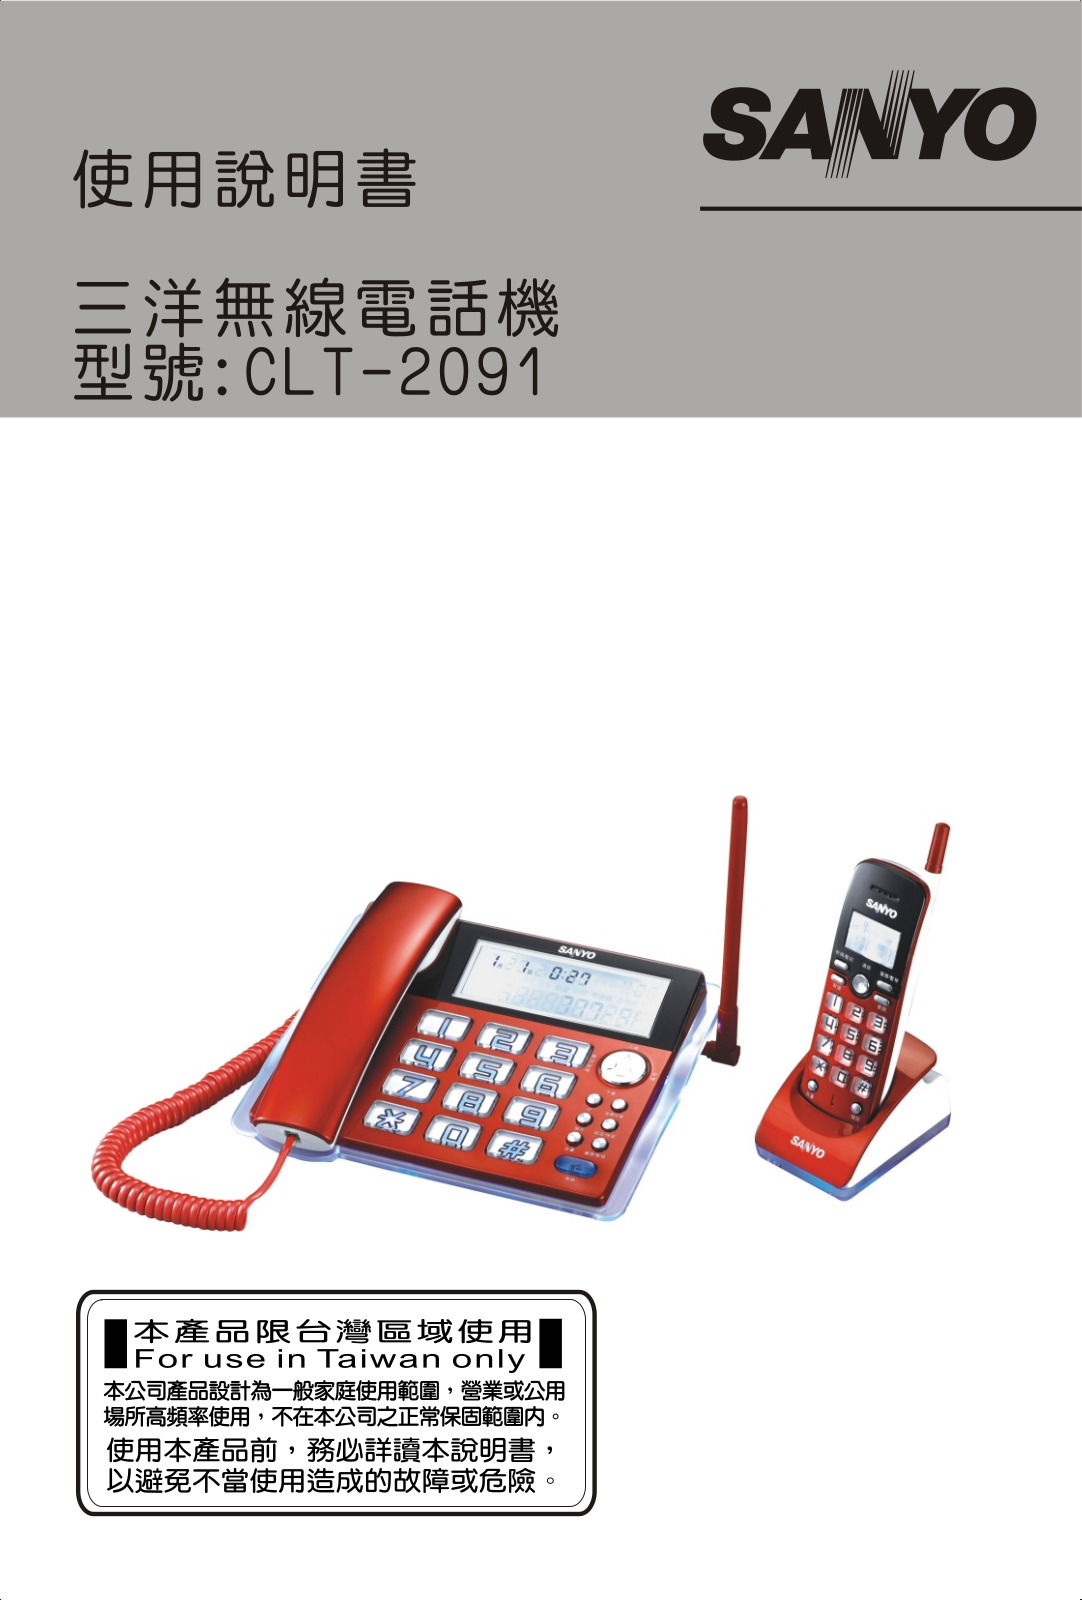 SANYO CLT-2091 User Manual